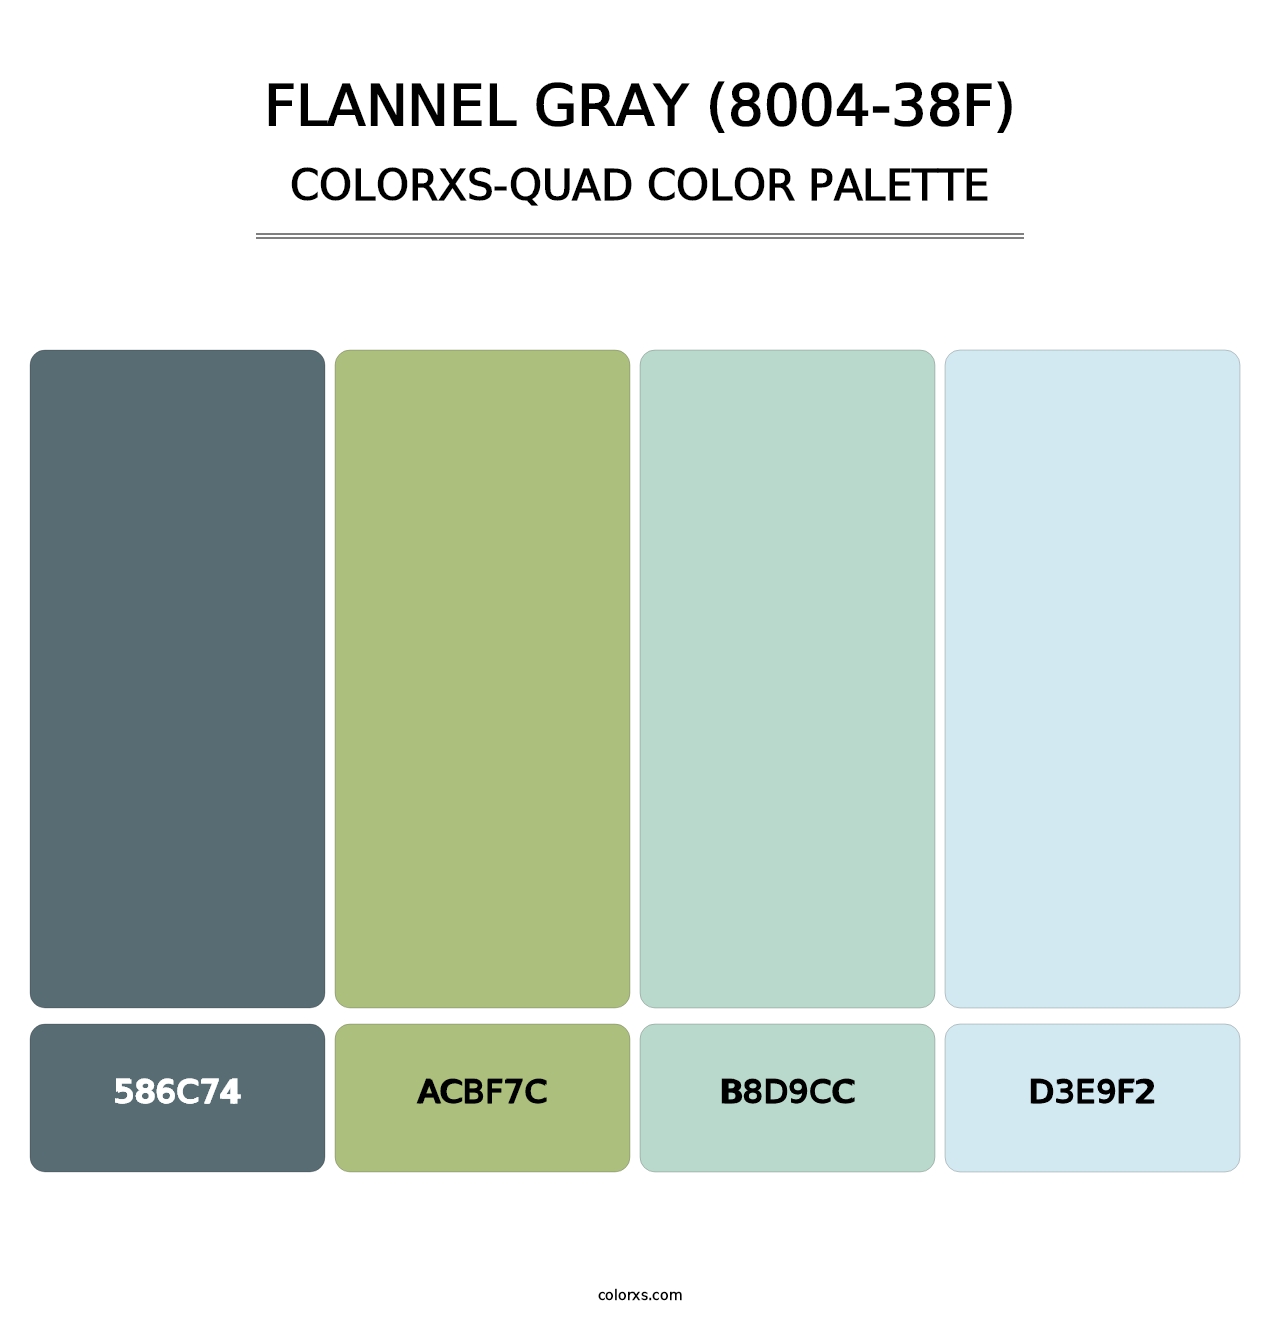 Flannel Gray (8004-38F) - Colorxs Quad Palette